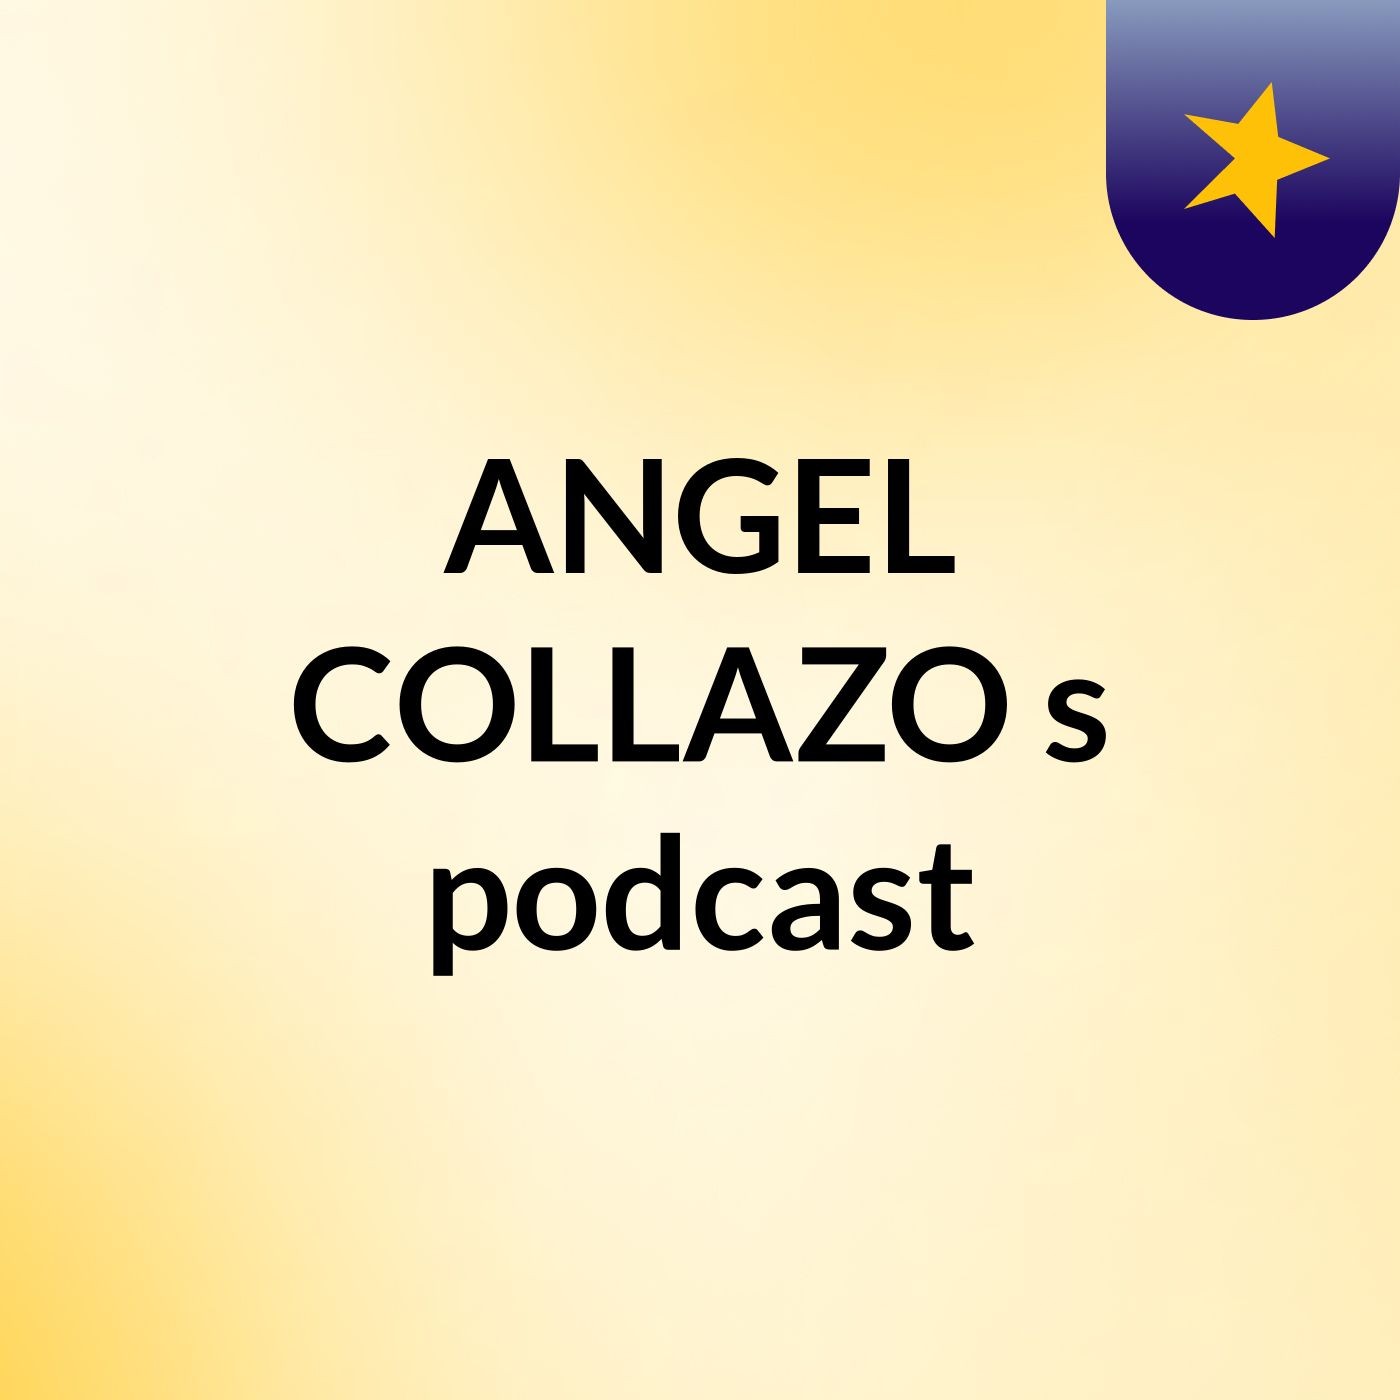 ANGEL COLLAZO's podcast